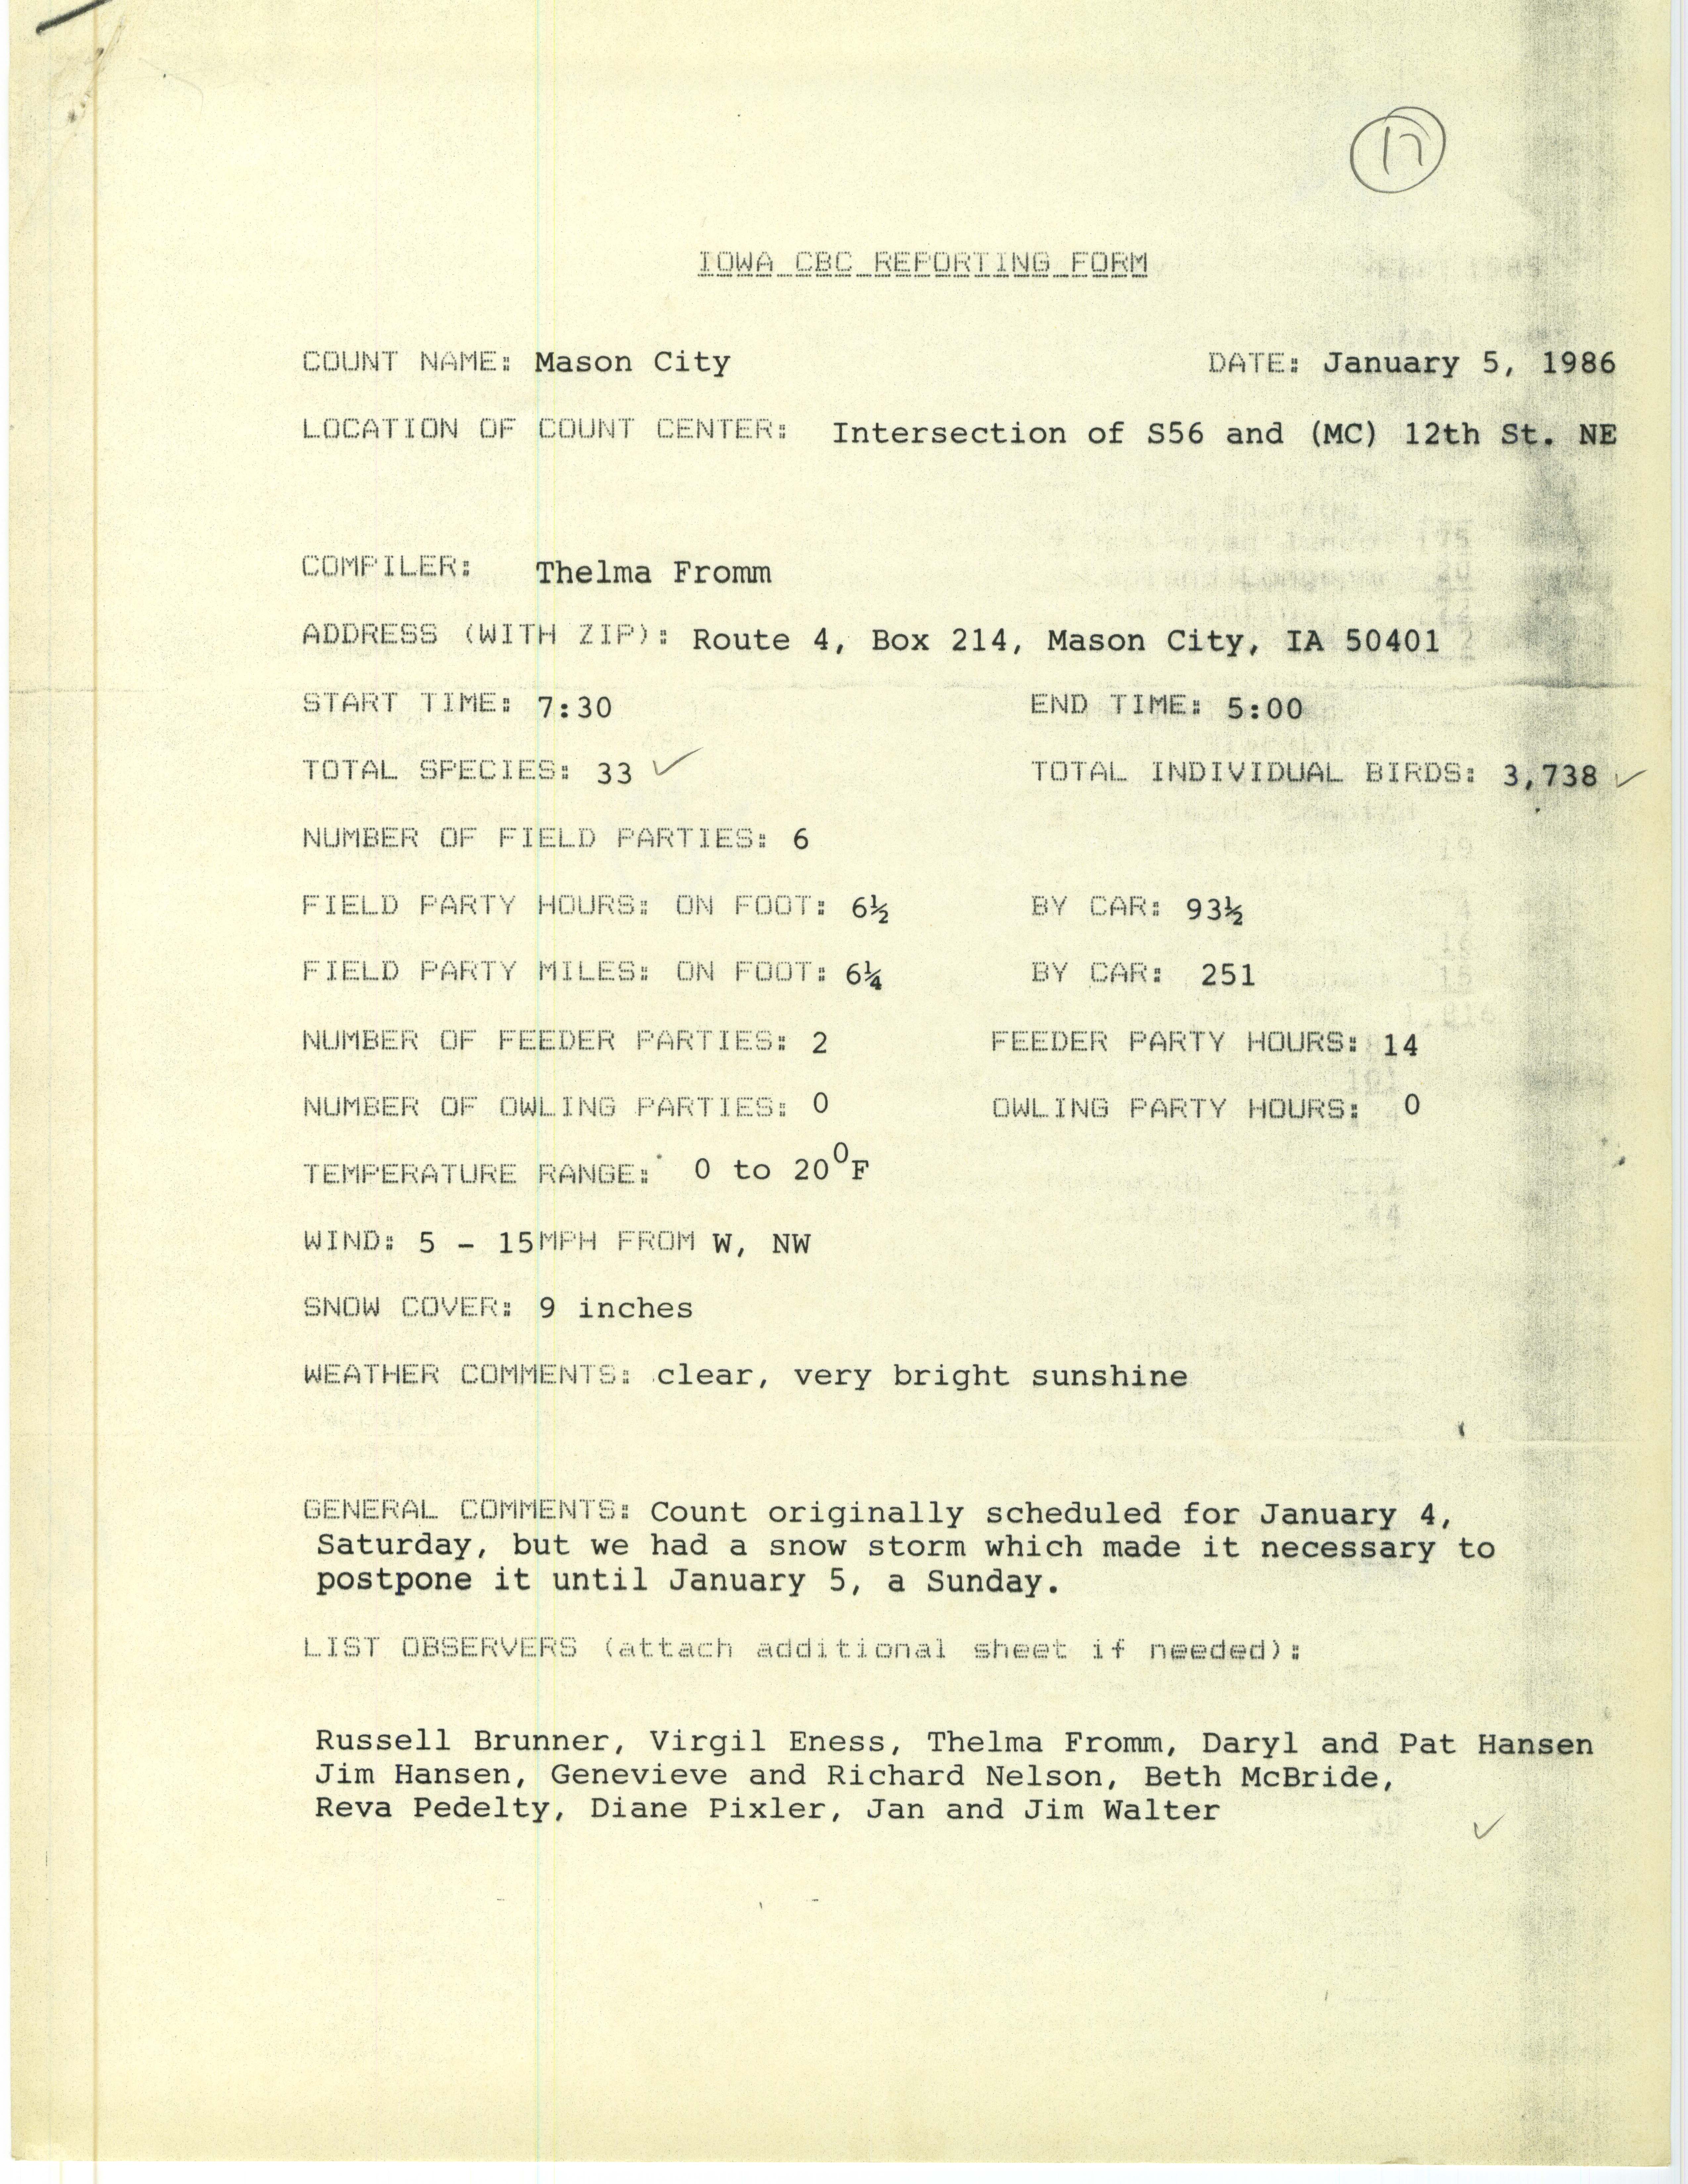 Iowa CBC reporting form, Mason City, January 5, 1986